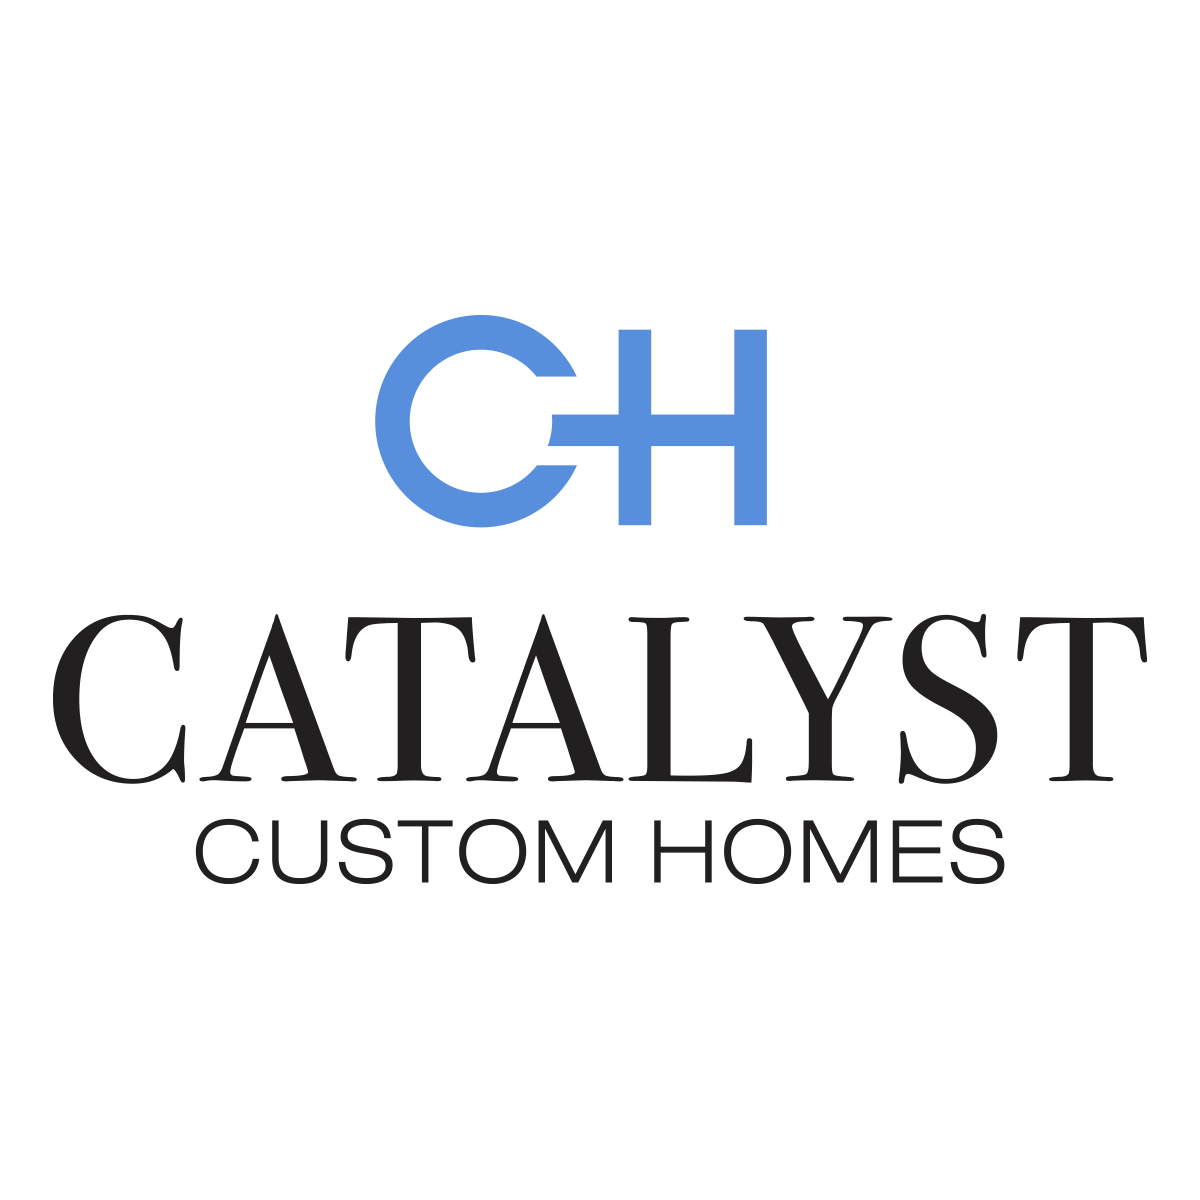 Homes.com Logo - About Catalyst. Catalyst Custom Homes